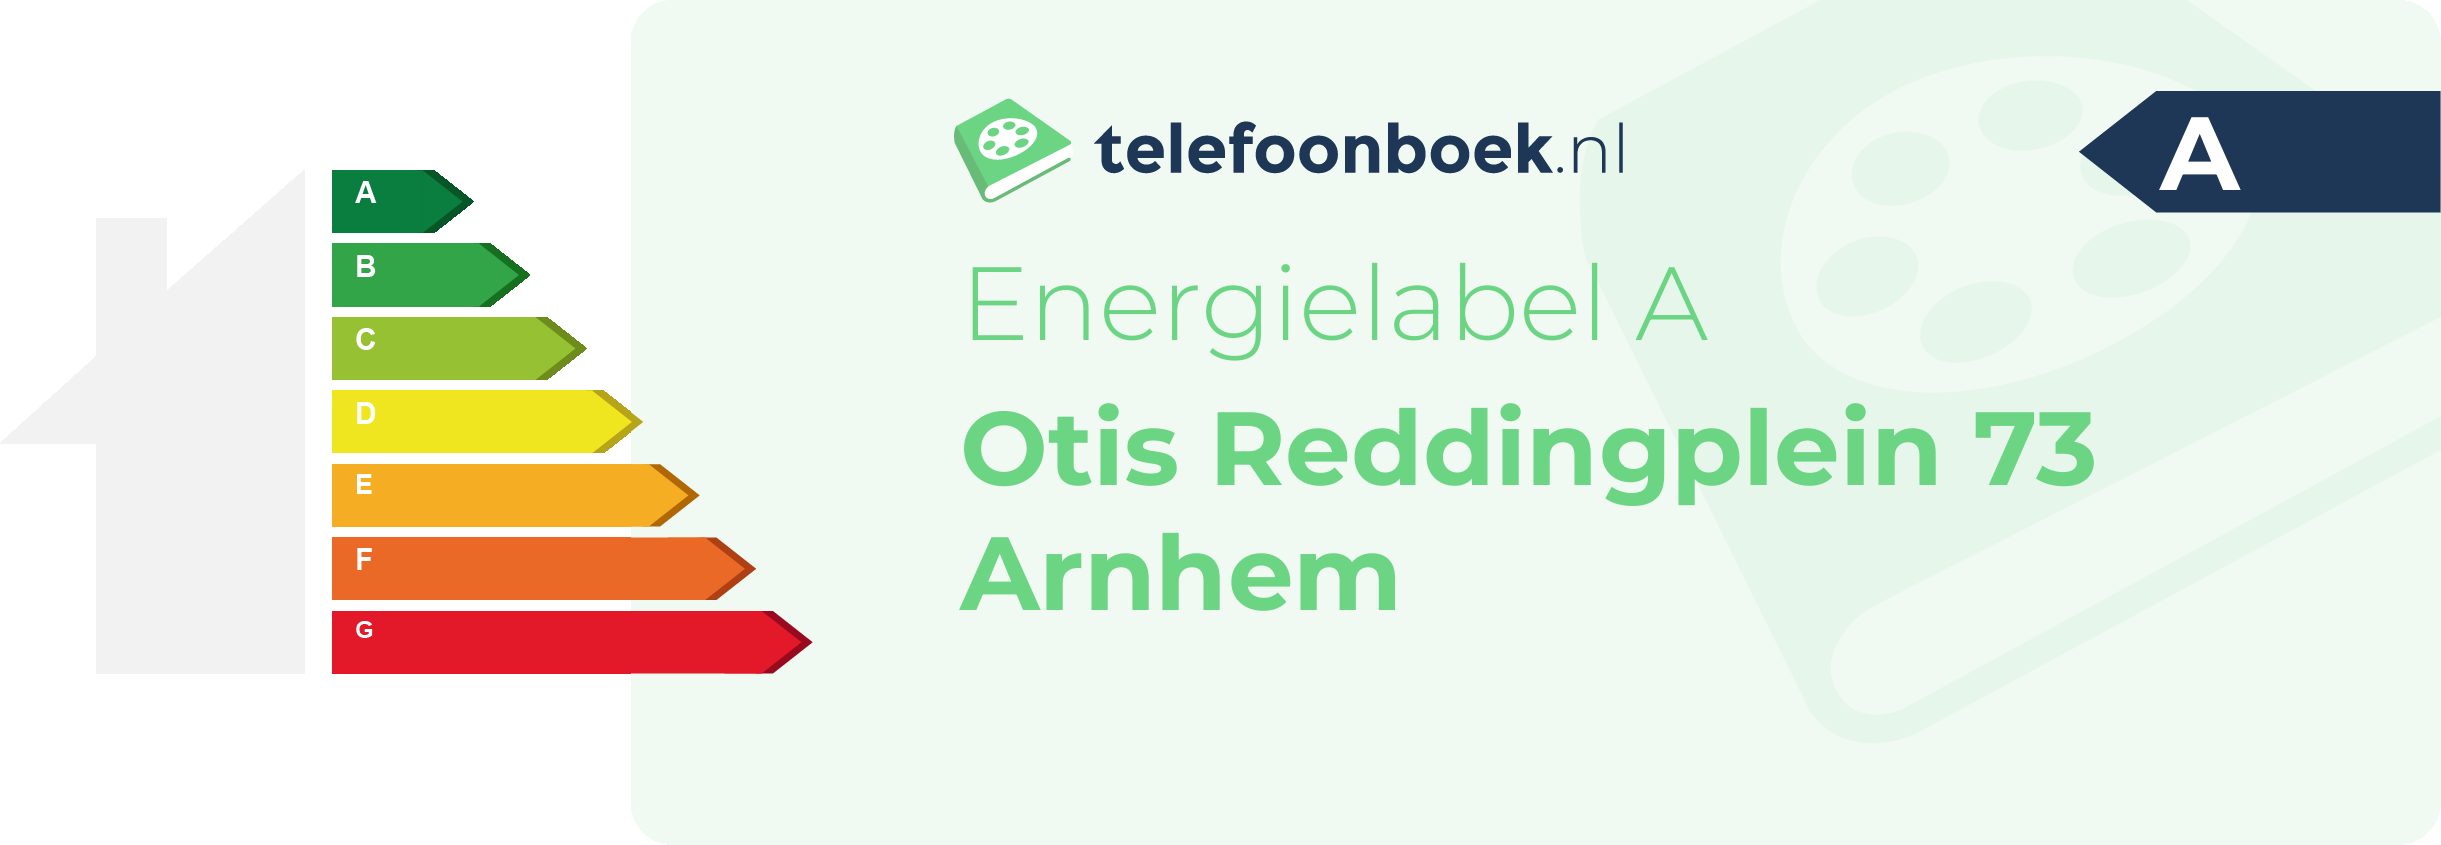 Energielabel Otis Reddingplein 73 Arnhem